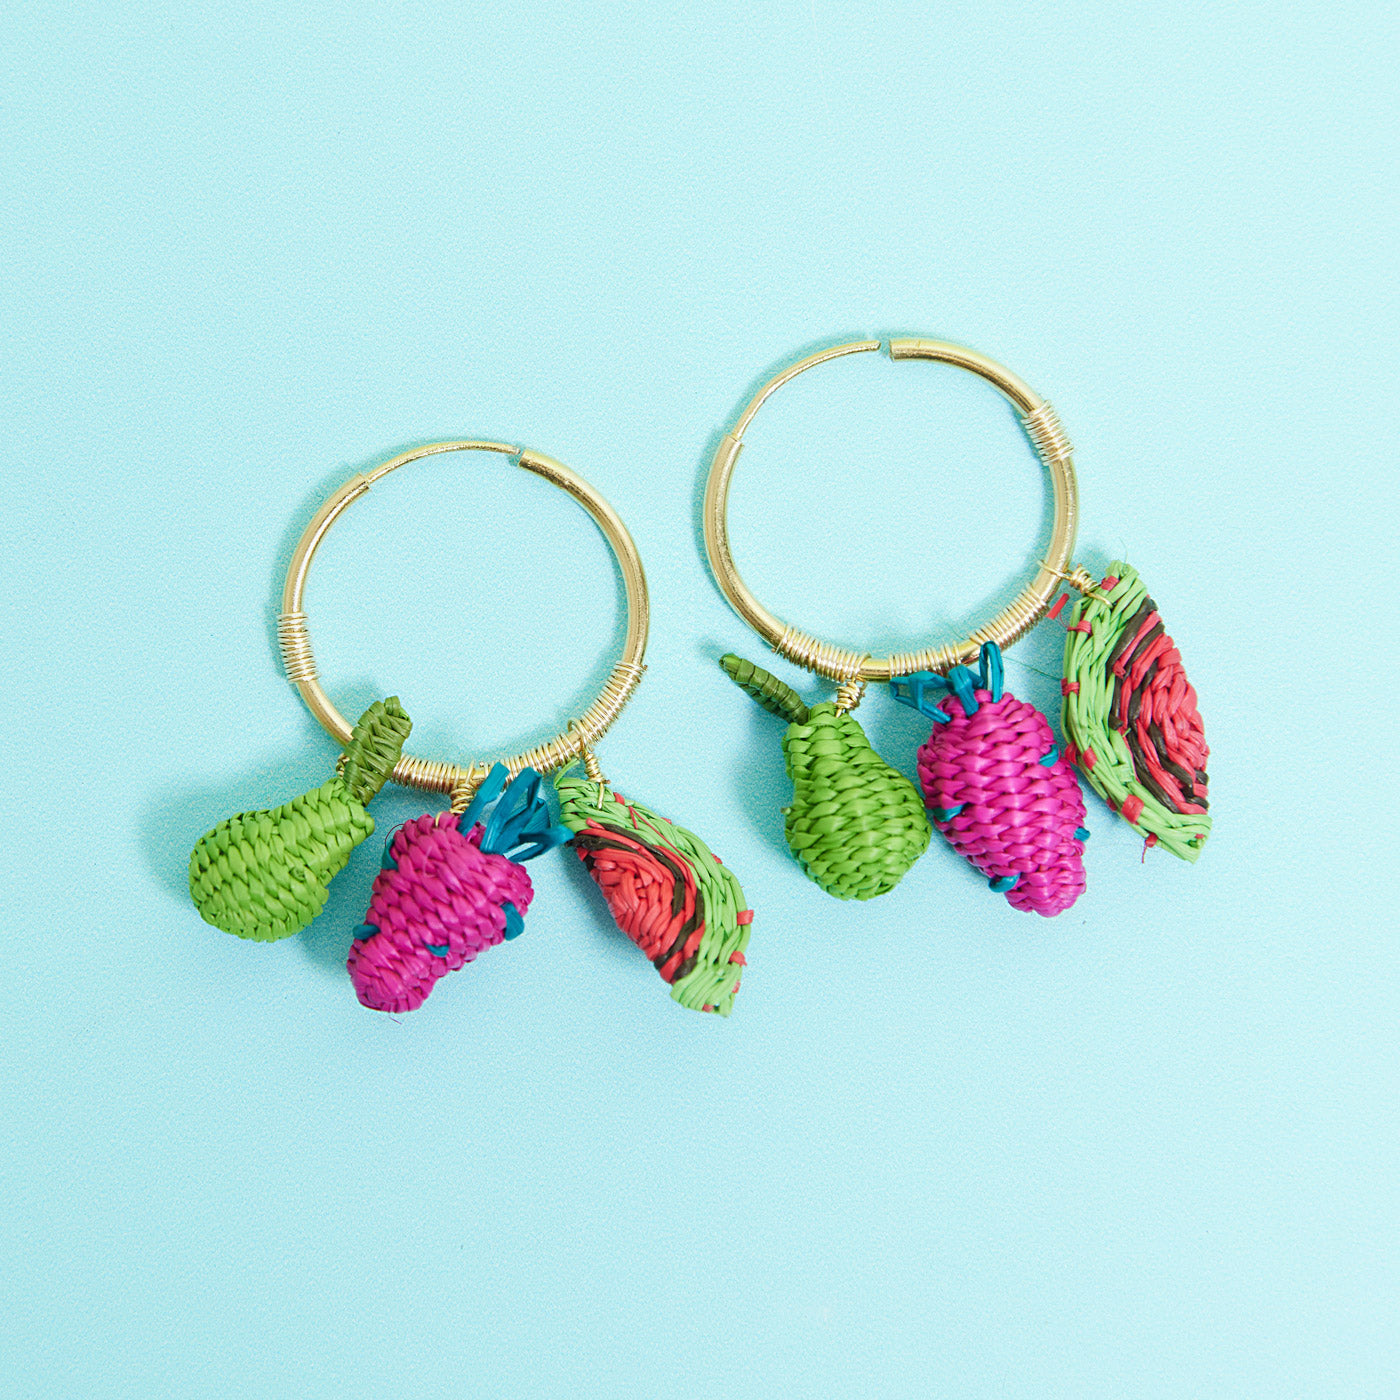 Fruit salad earrings from Wicker Darling on a blue background